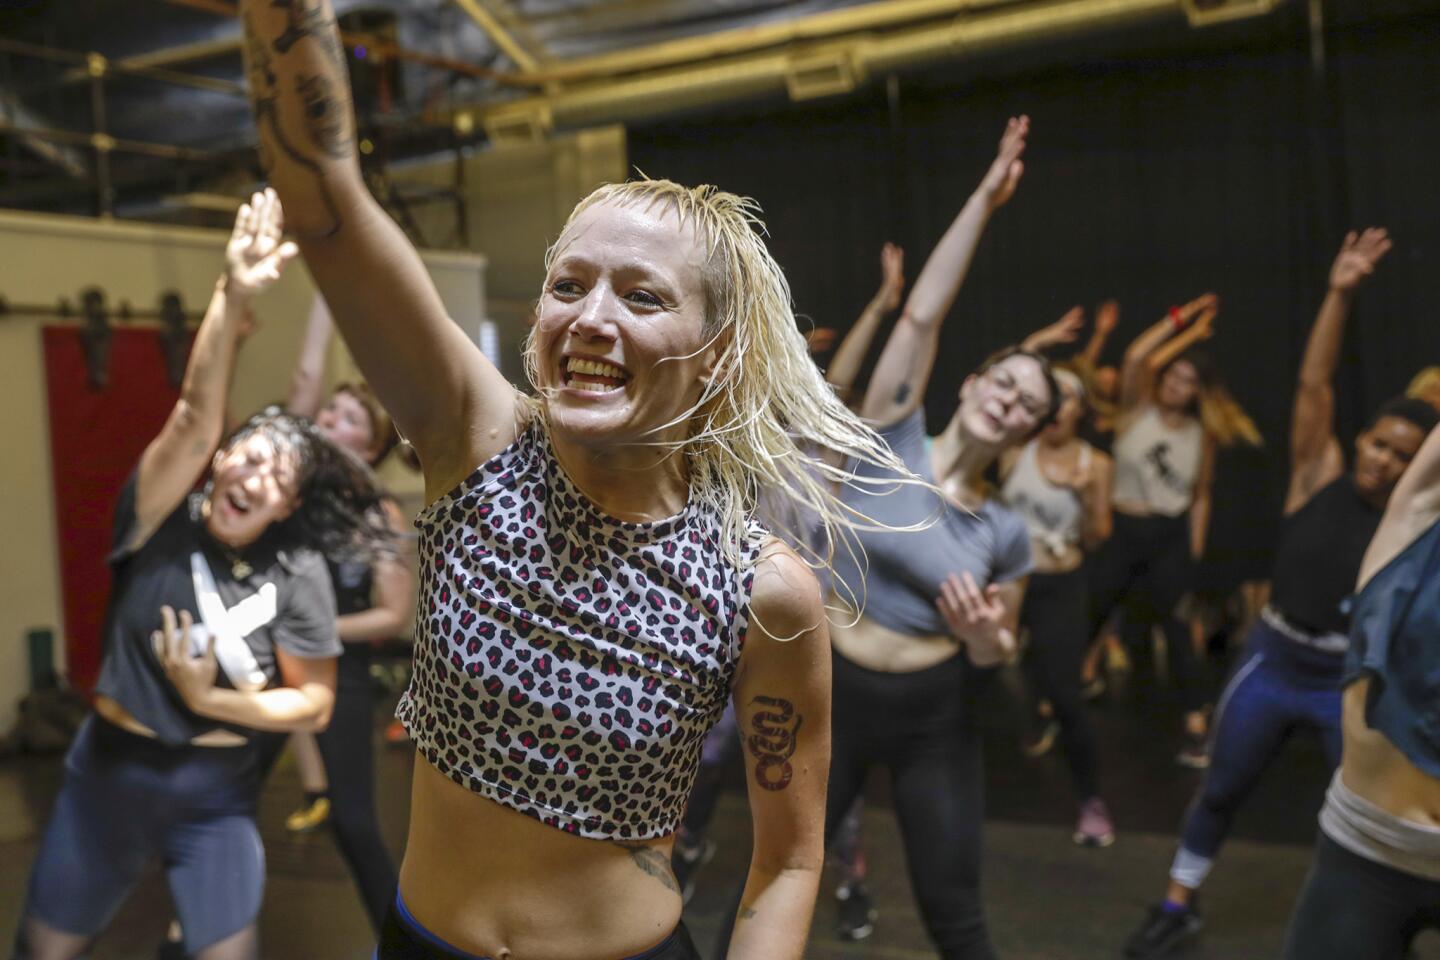 Pony Sweat creator Emilia Richeson calls her dance aerobics classes "a fiercely noncompetitive dance space."